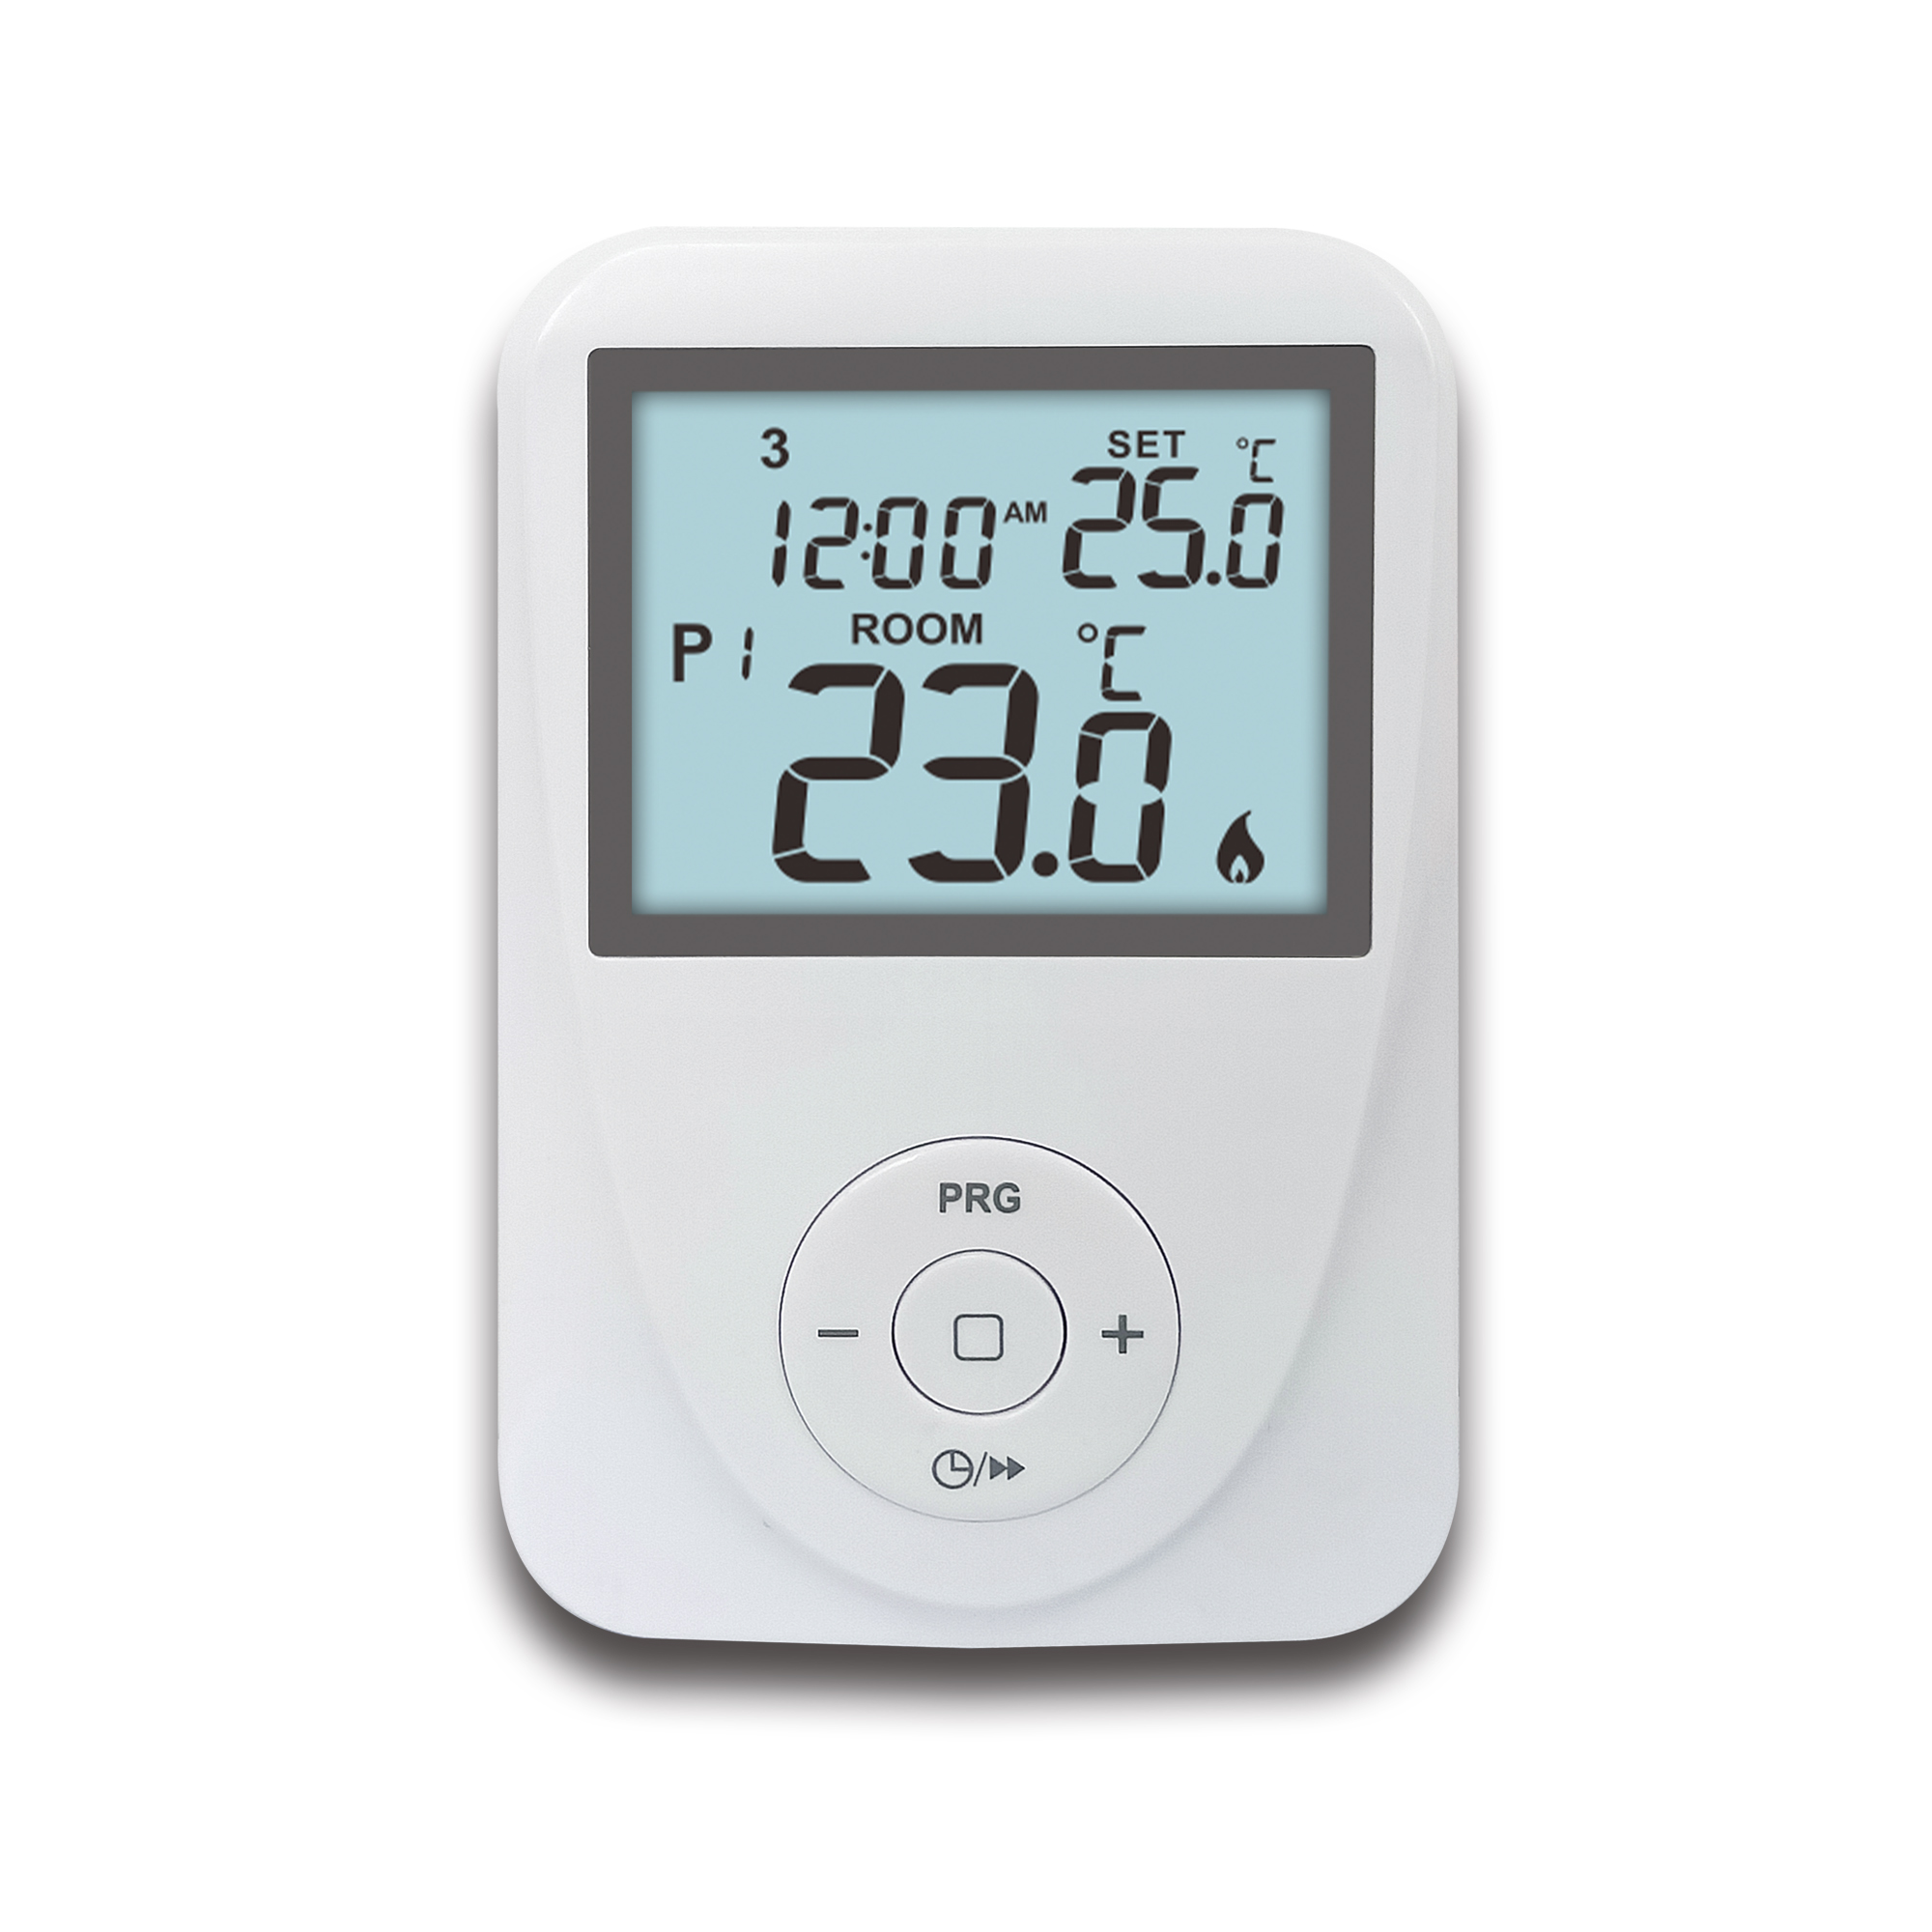 China Professional Digital Room Thermostat Manufacturer - OCSTAT